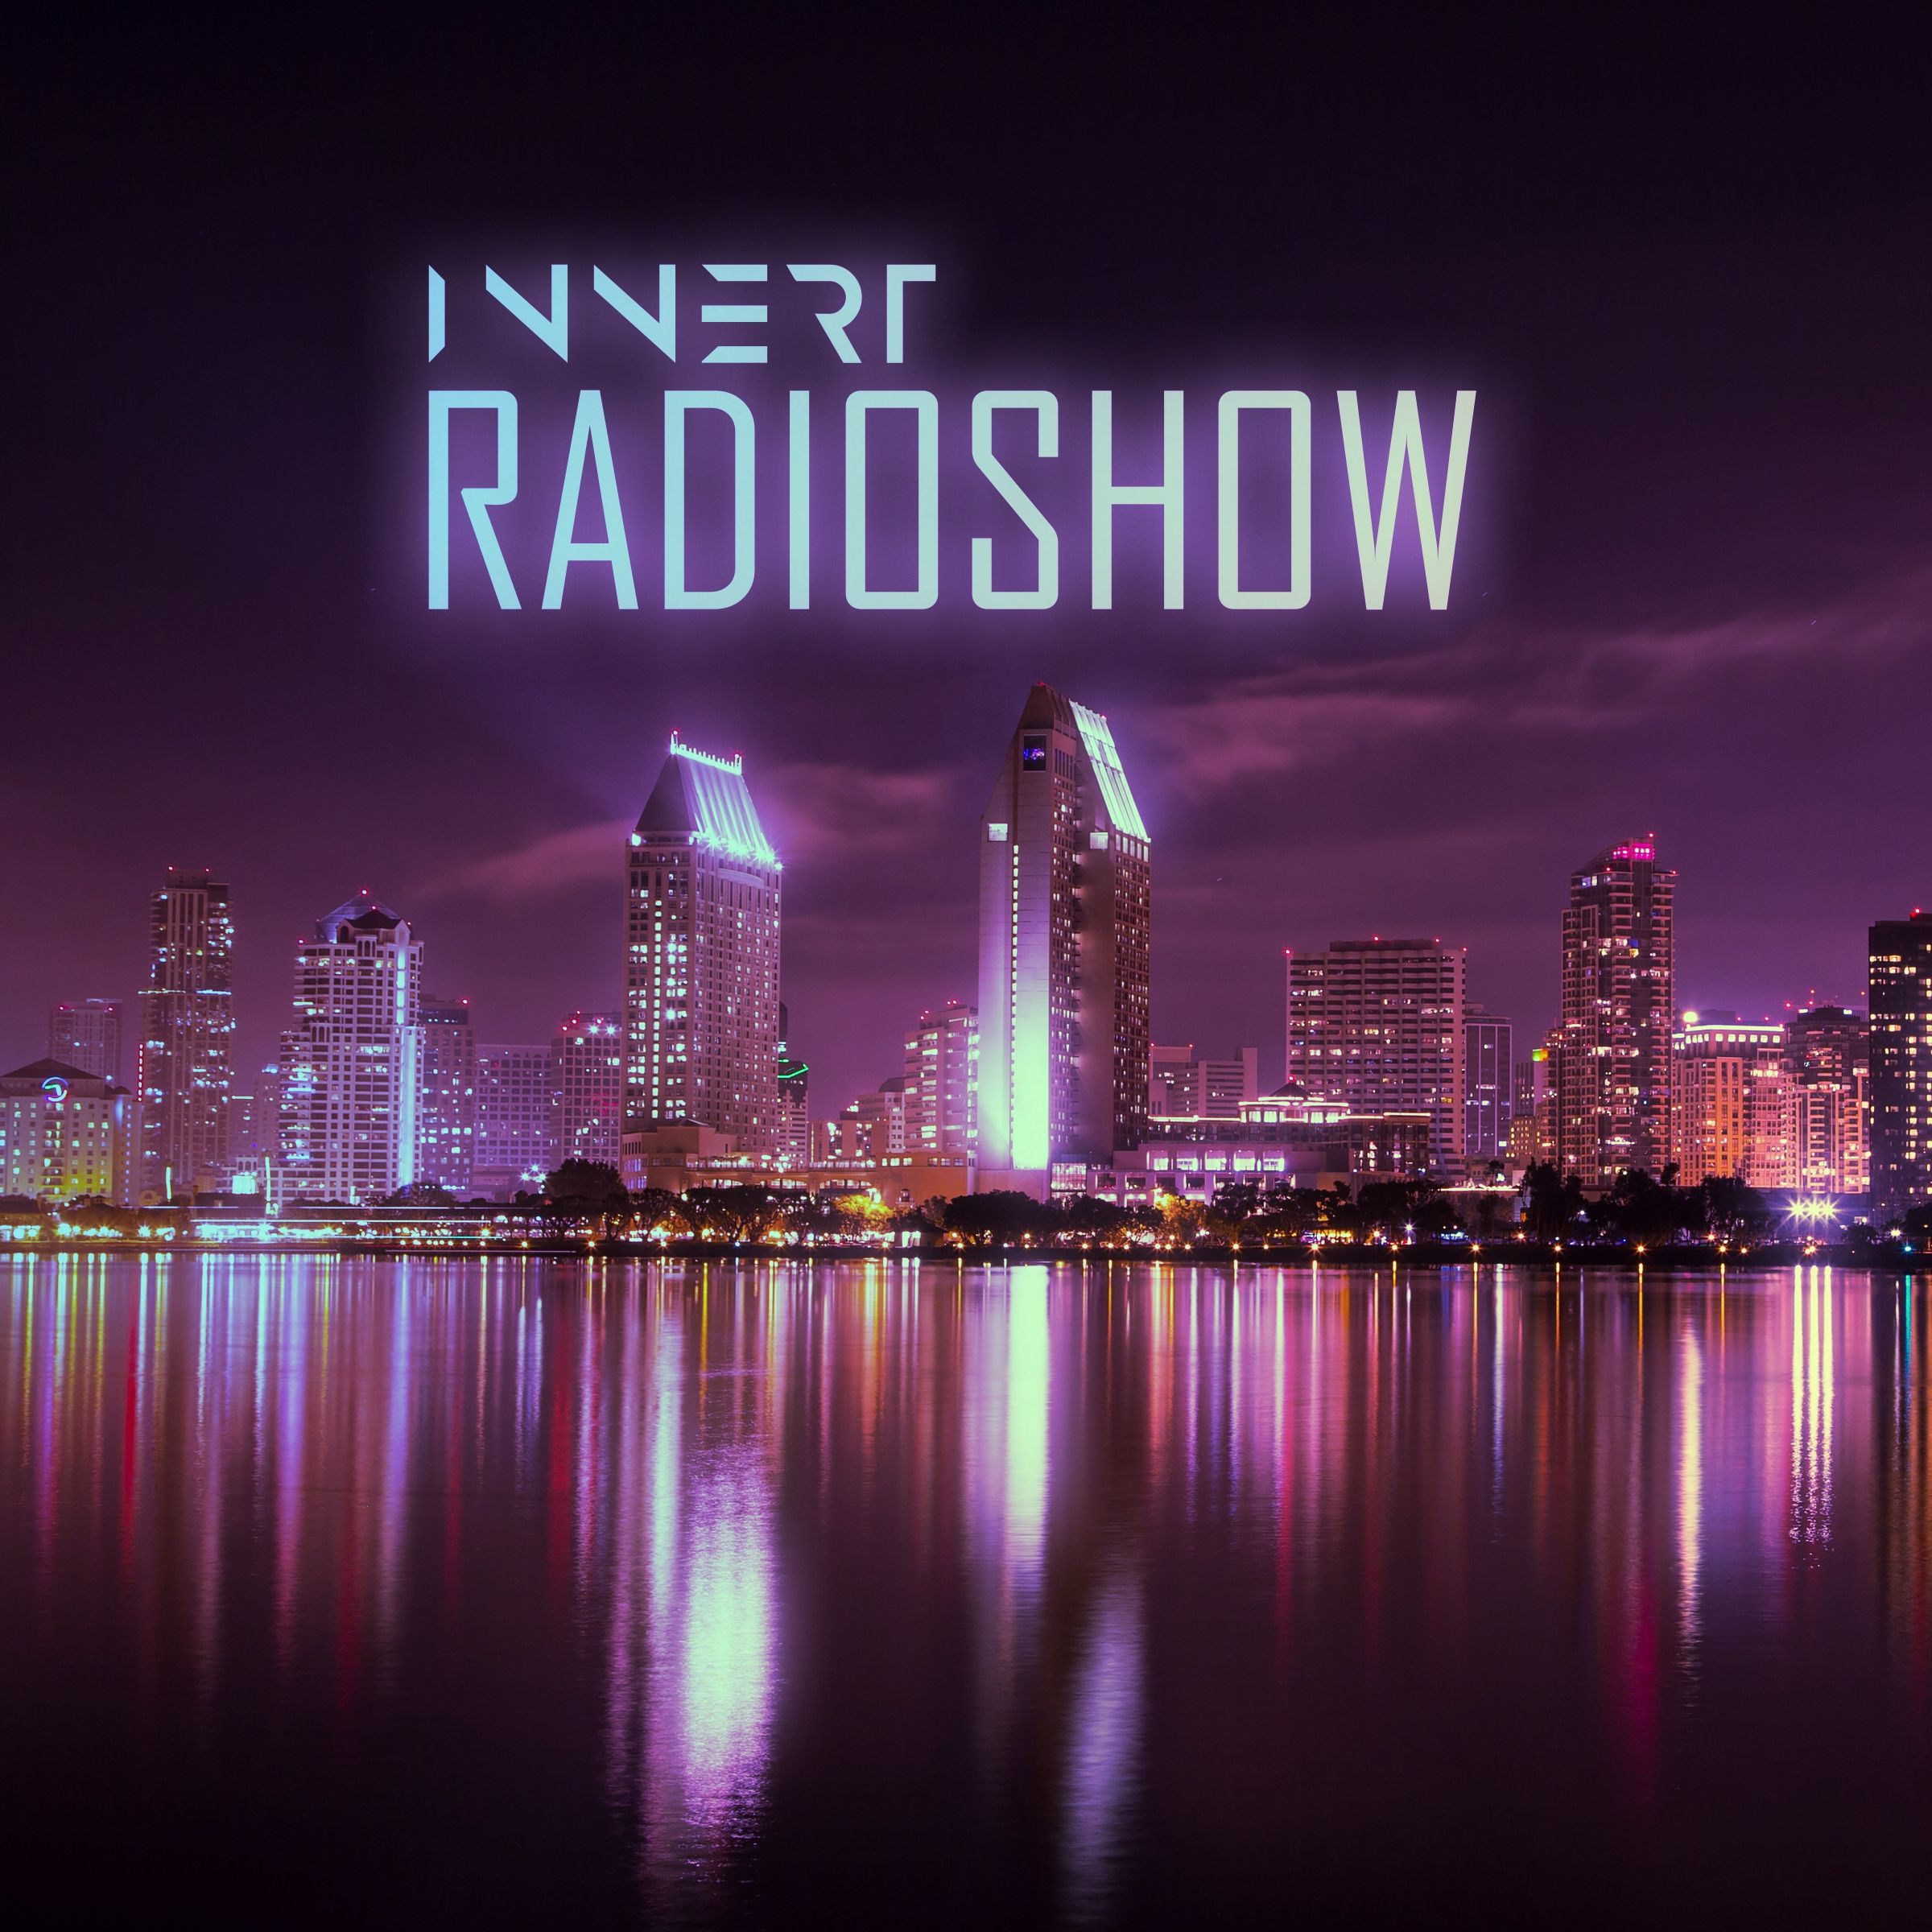 INNERT Radioshow